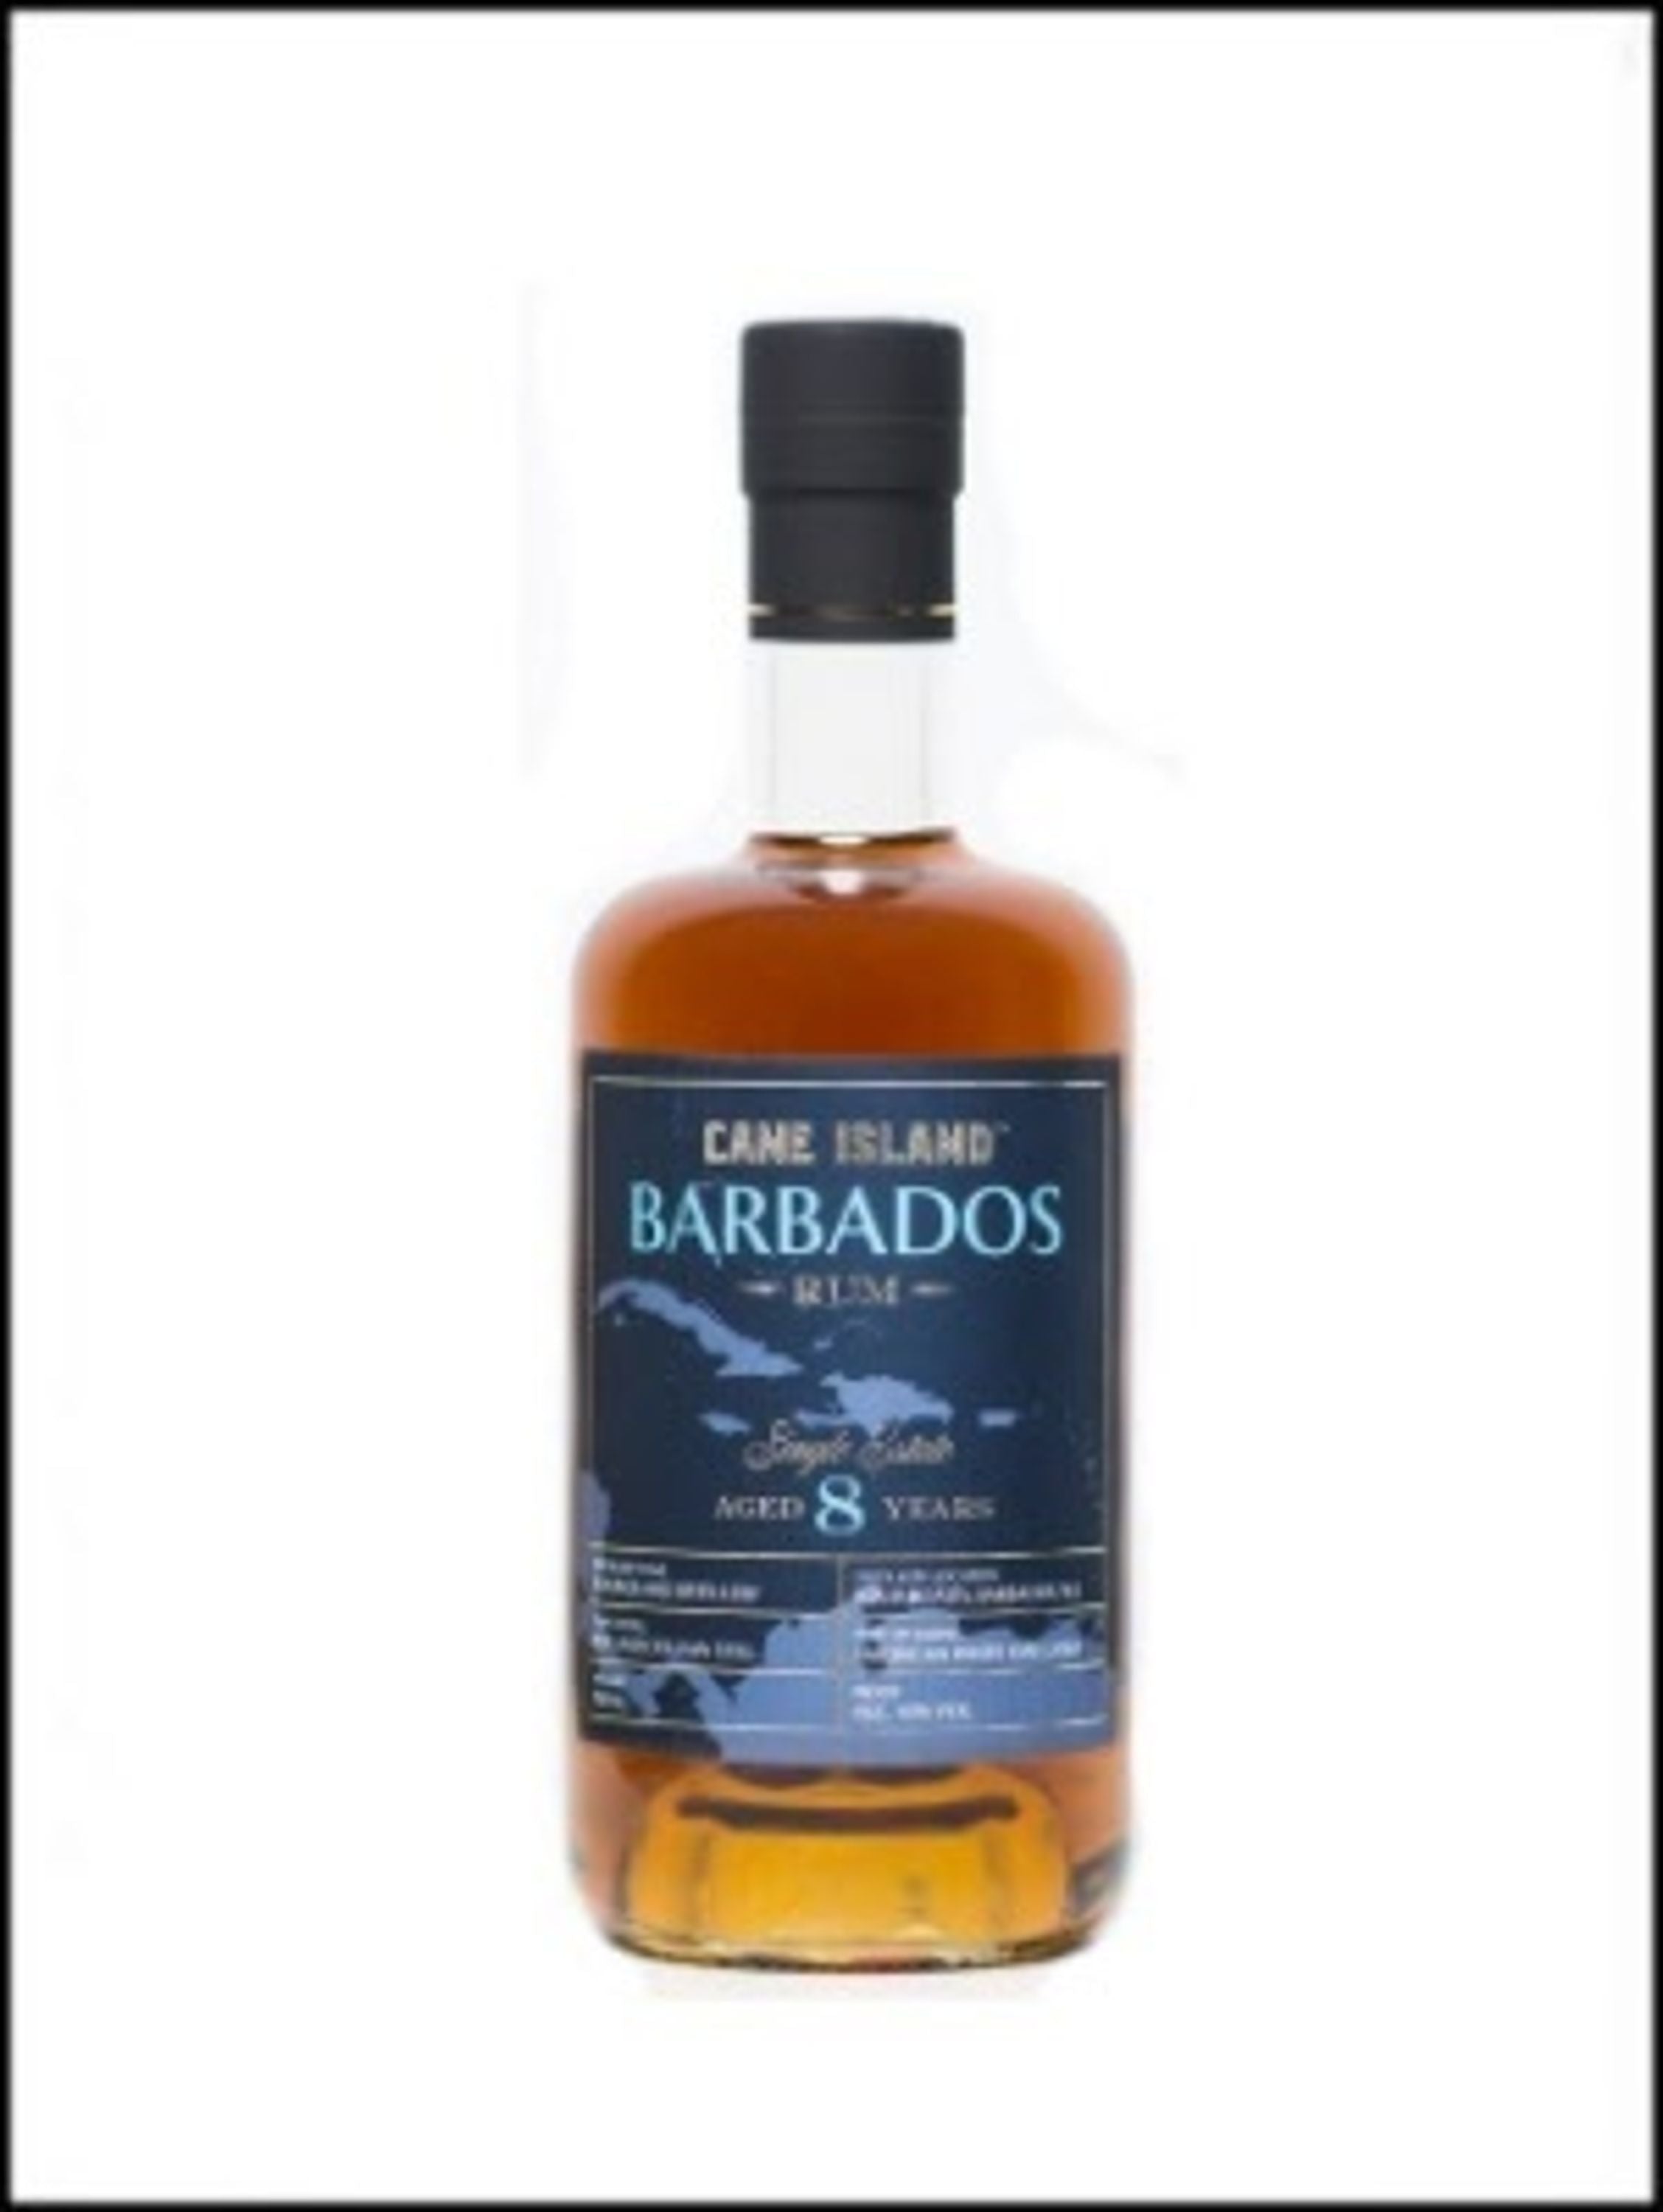 Cane Island Barbados Single Estate Rum 8 years 0.7l alc. 43% vol.